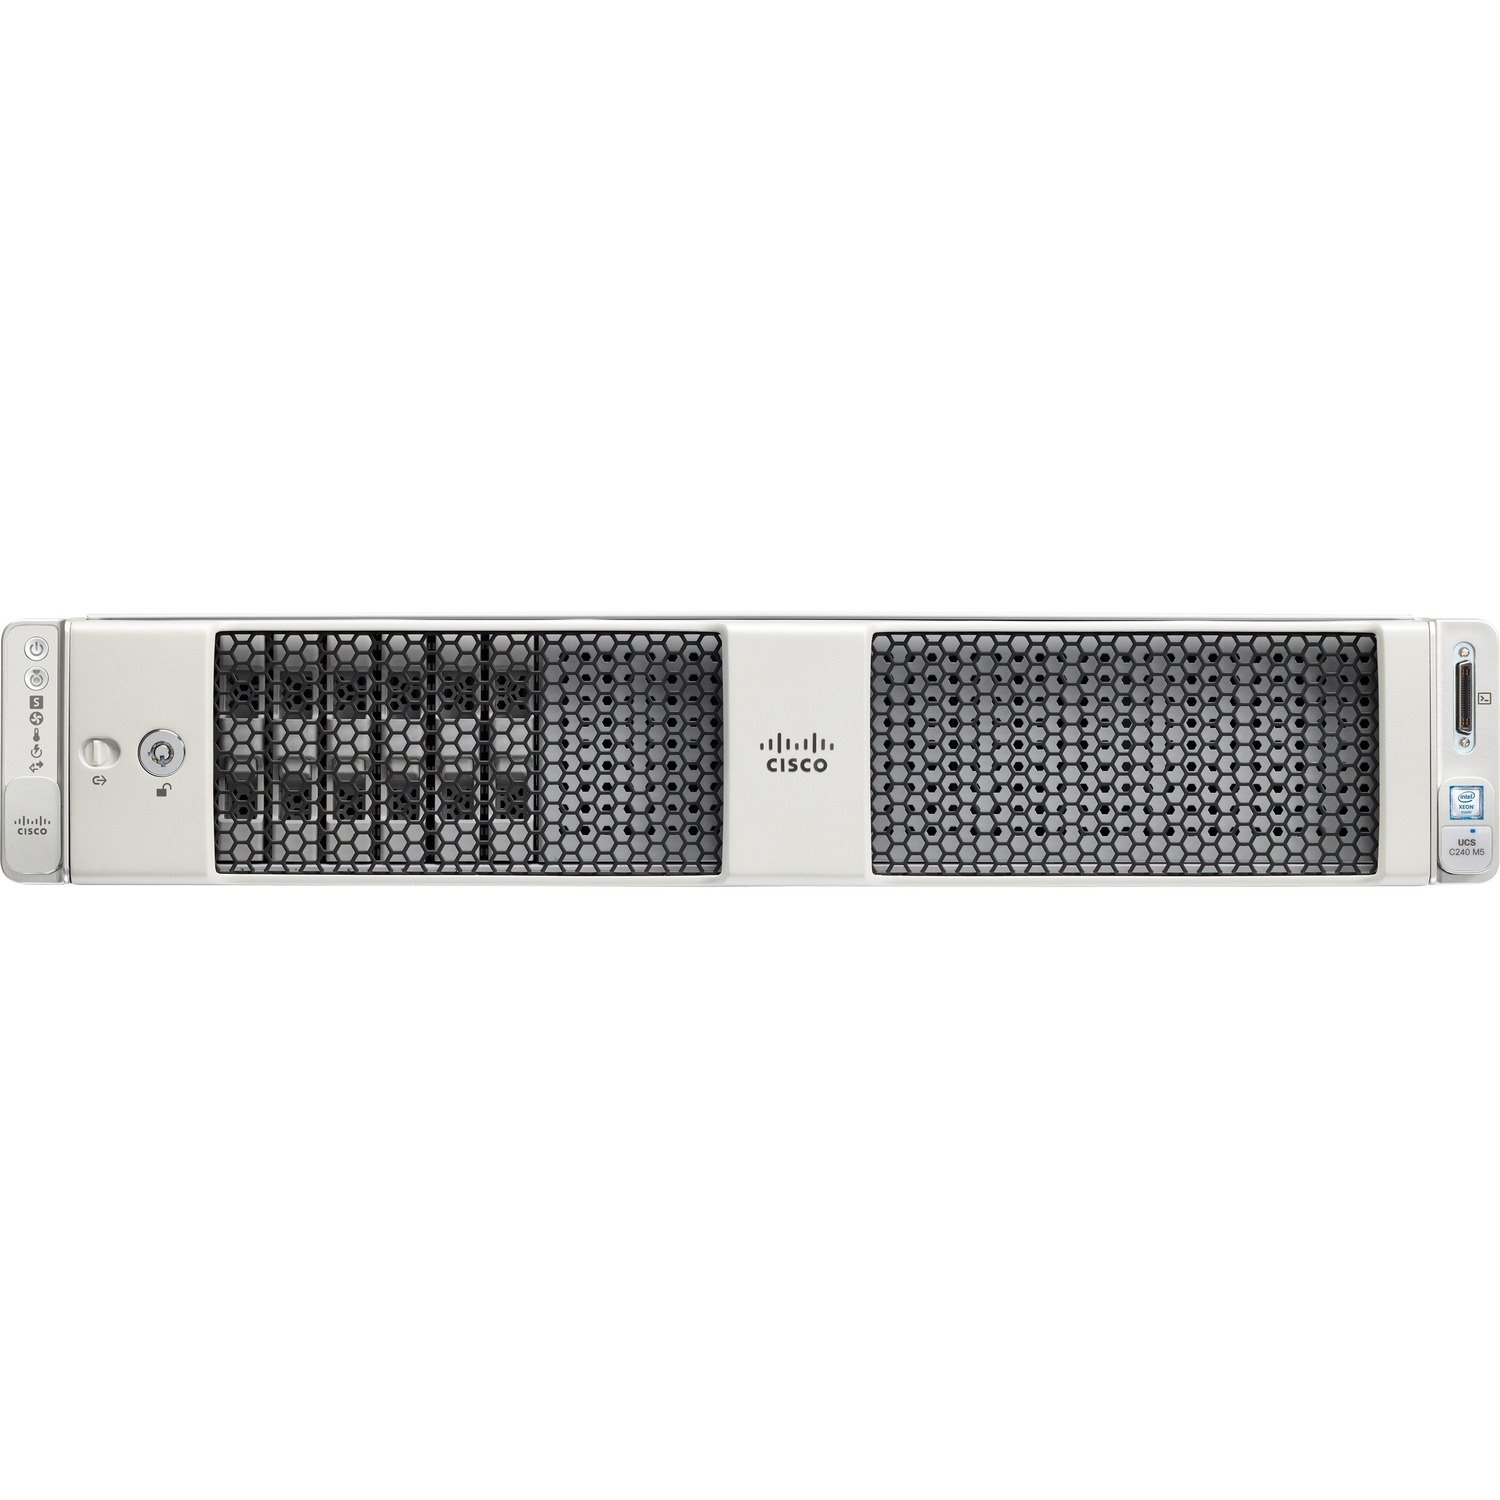 Cisco C240 M5 2U Rack-mountable Server - 2 x Intel Xeon Silver 4110 2.10 GHz - 192 GB RAM - 12Gb/s SAS Controller